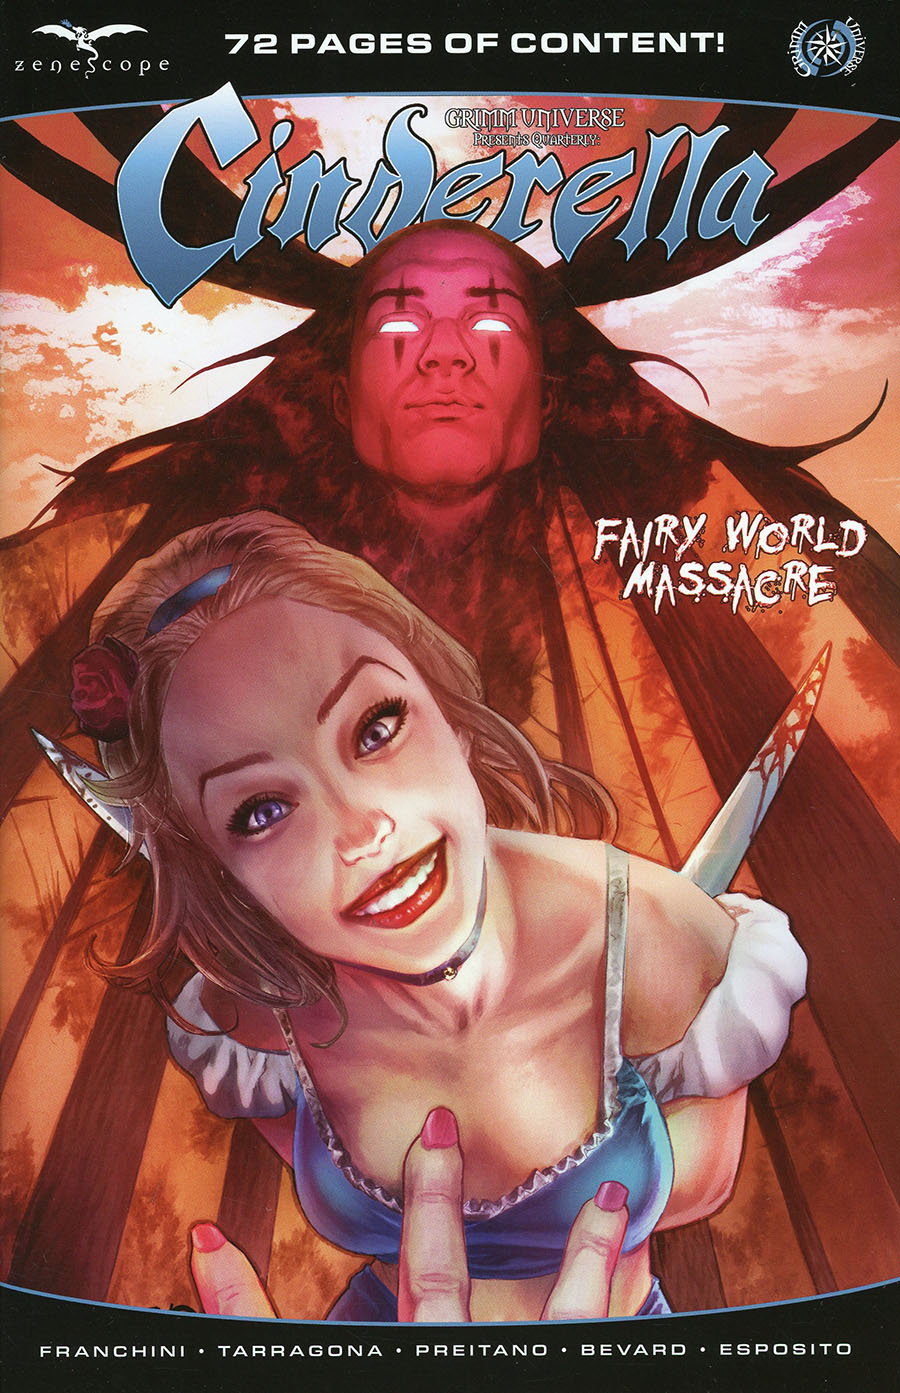 Grimm Fairy Tales Presents Grimm Universe Quarterly #9 Cinderella Fairy World Massacre Cover A Al Barrionuevo